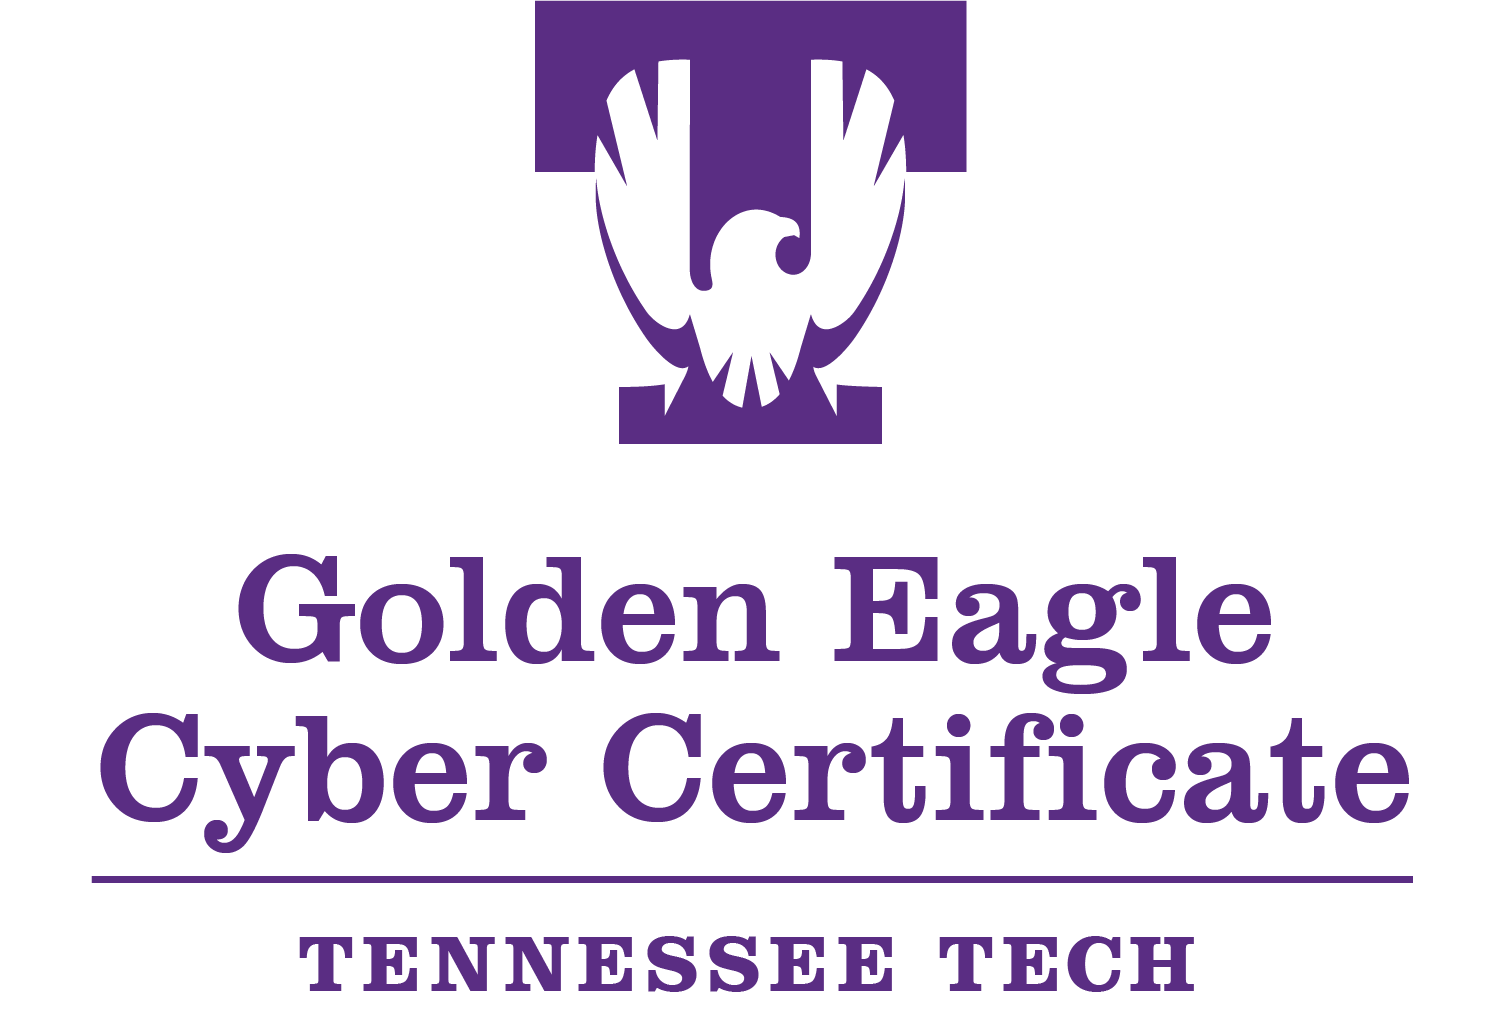 Golden Eagle Cyber Certificate logo